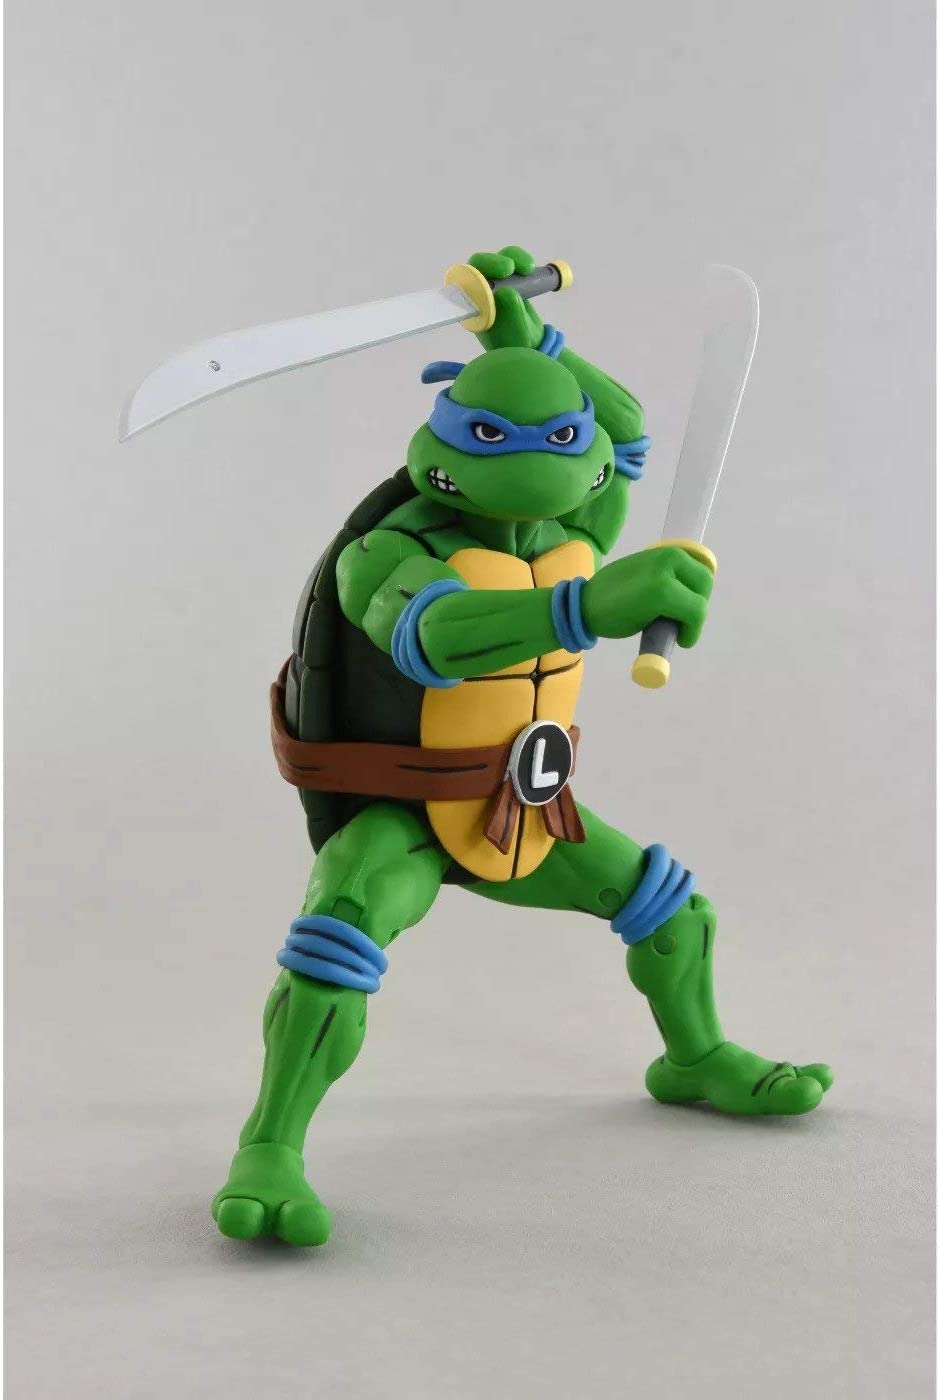 Neca Teenage Mutant Ninja Turtles Leonardo and Donatello (Classic Cartoon Season 2) Action Figure 2 Pack